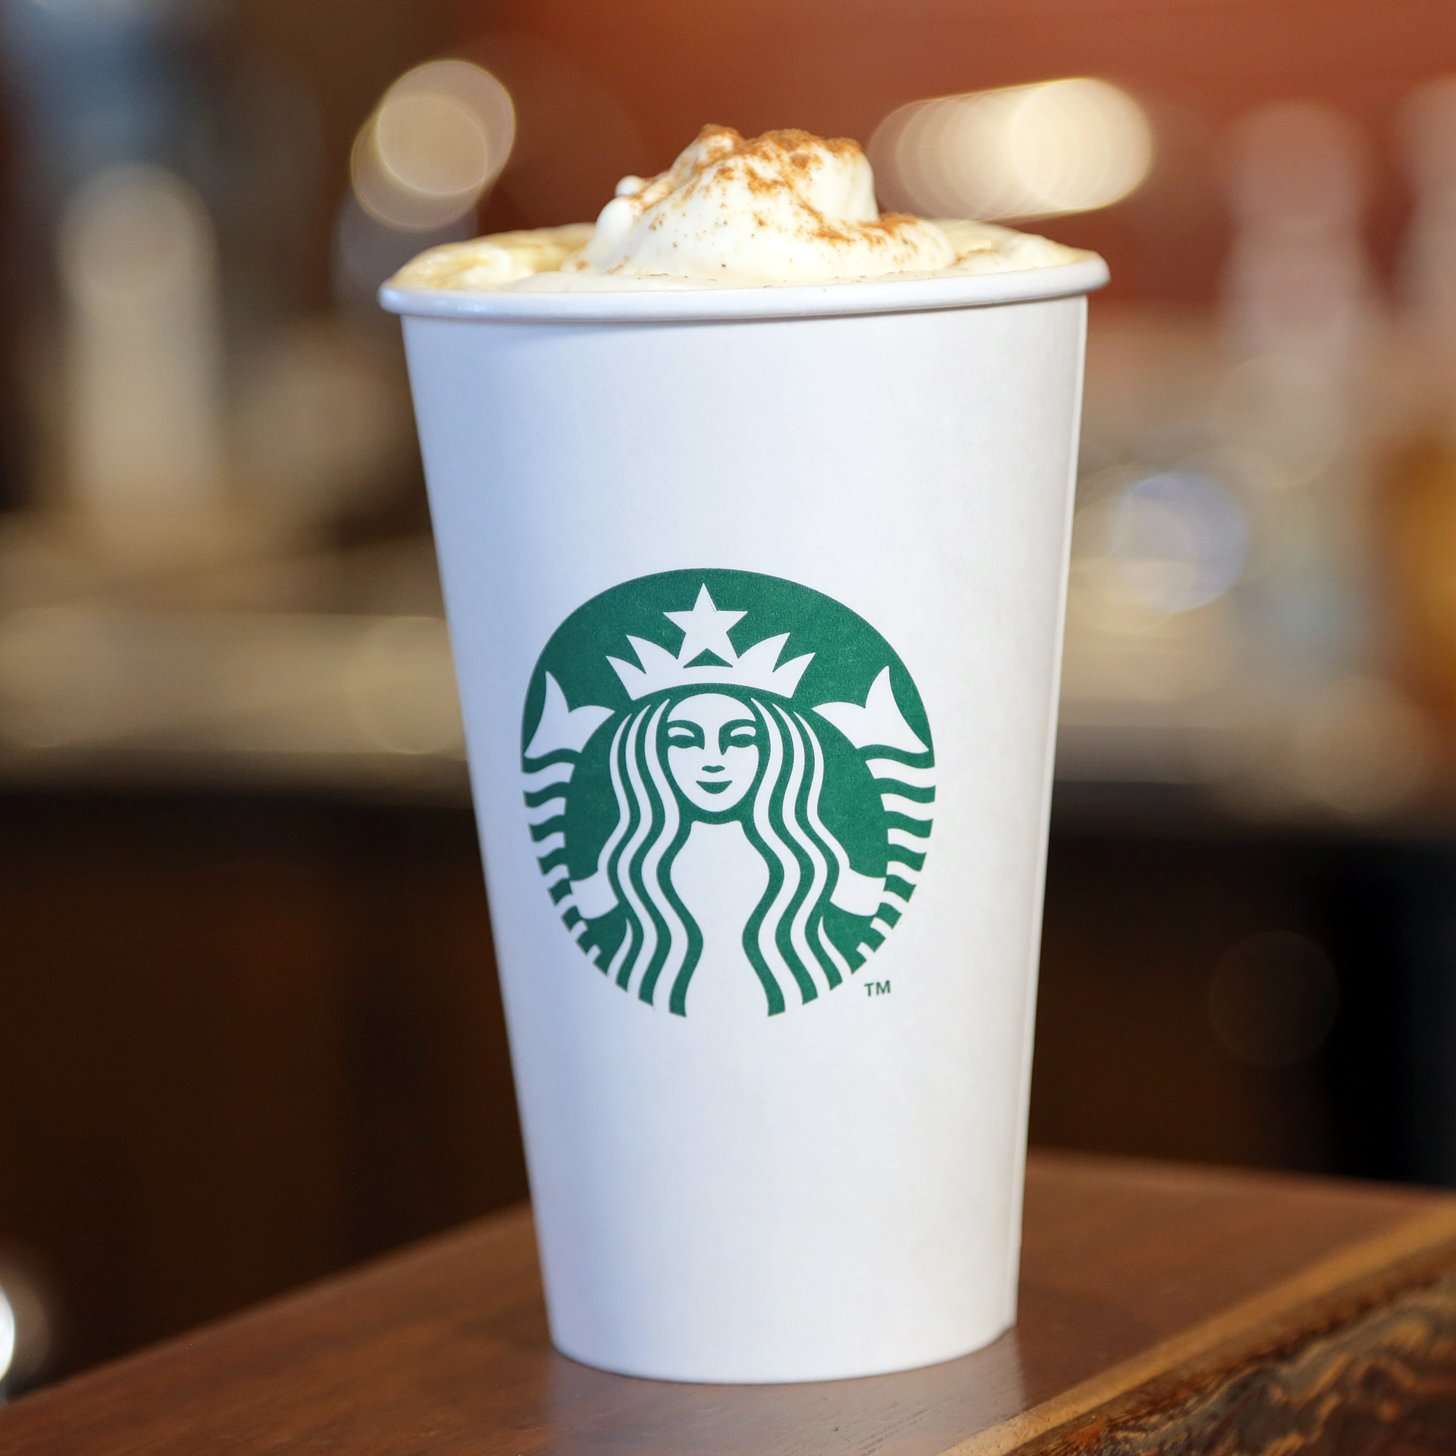 Starbucks New Pumpkin Spice Latte Recipe Will Taste the Same